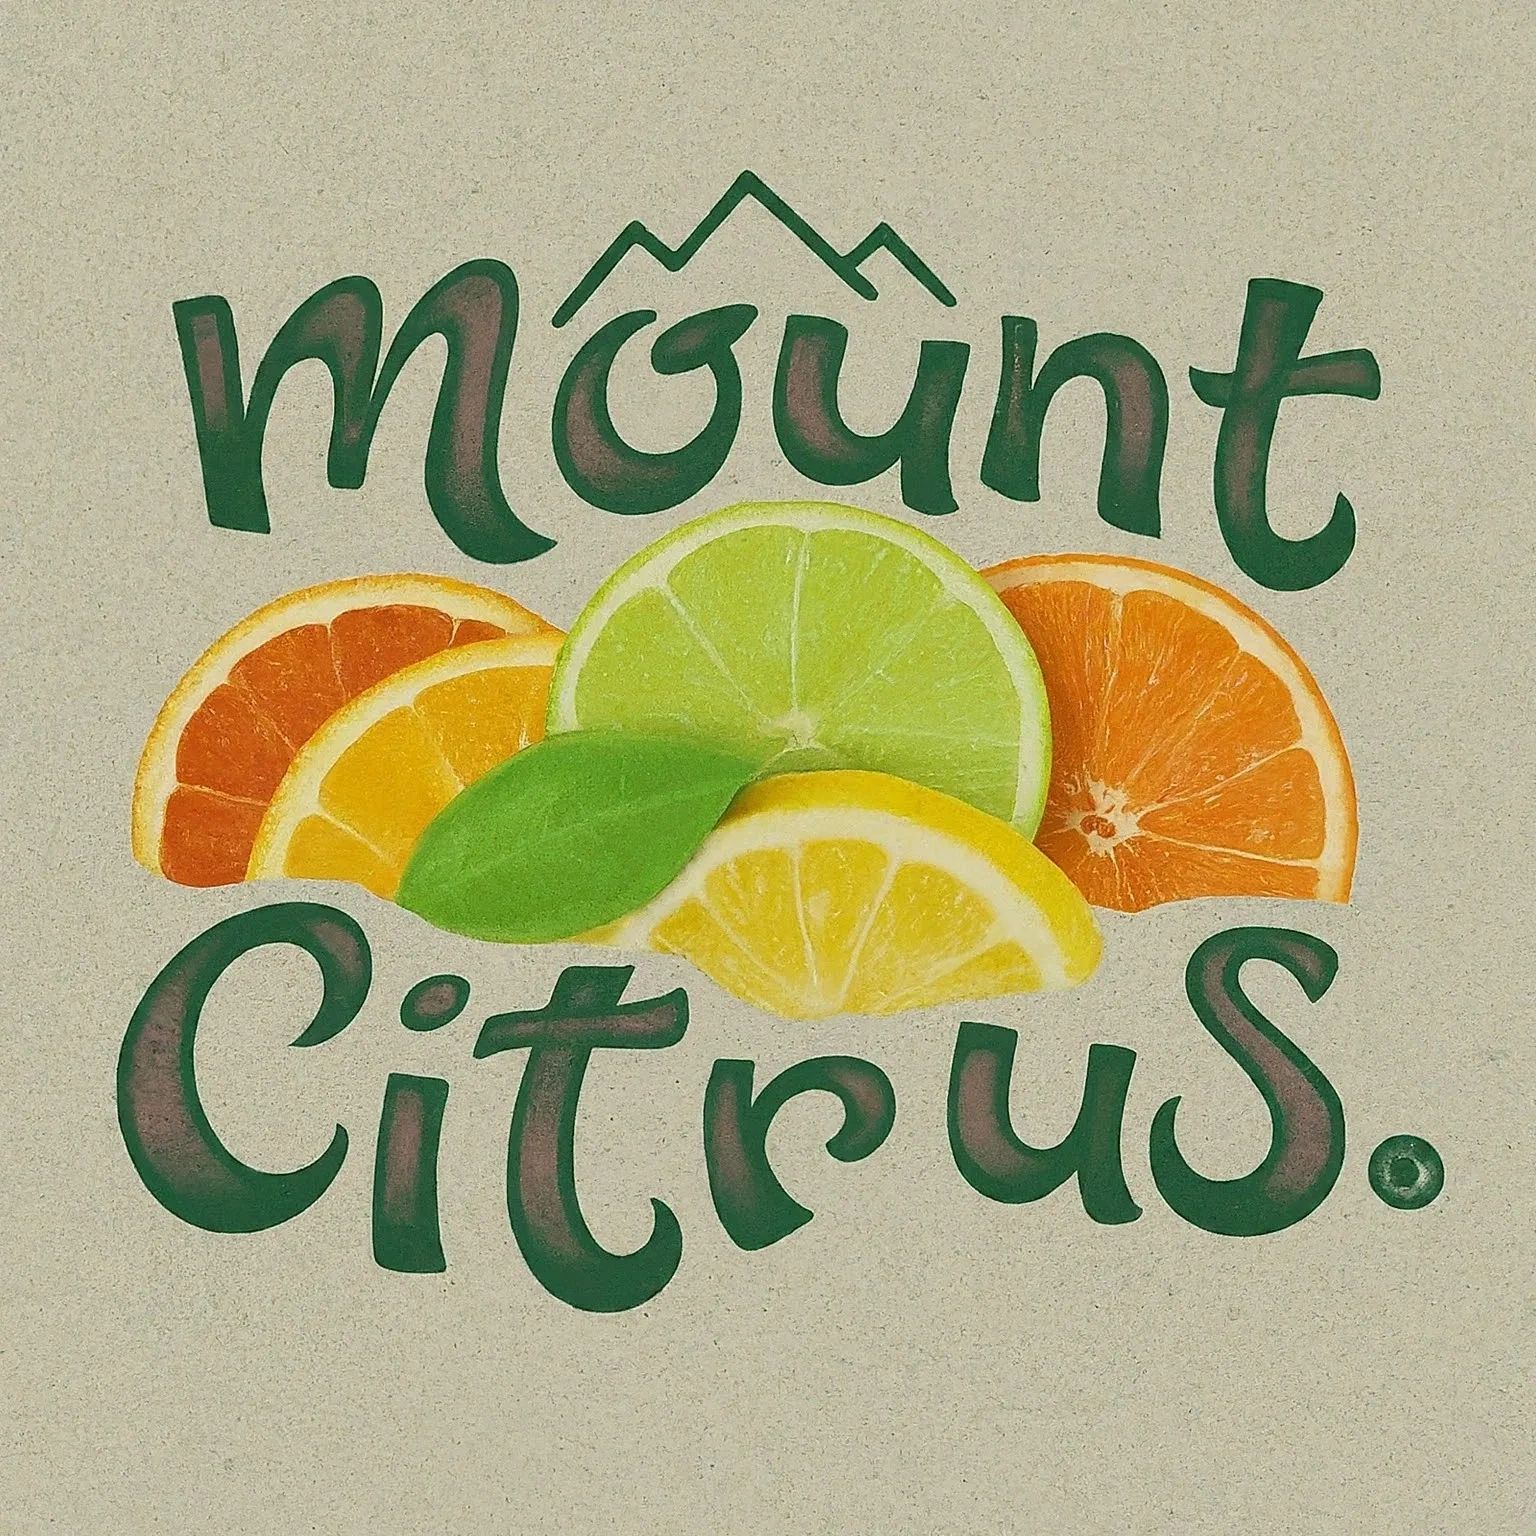 Logo of the mount citrus brand